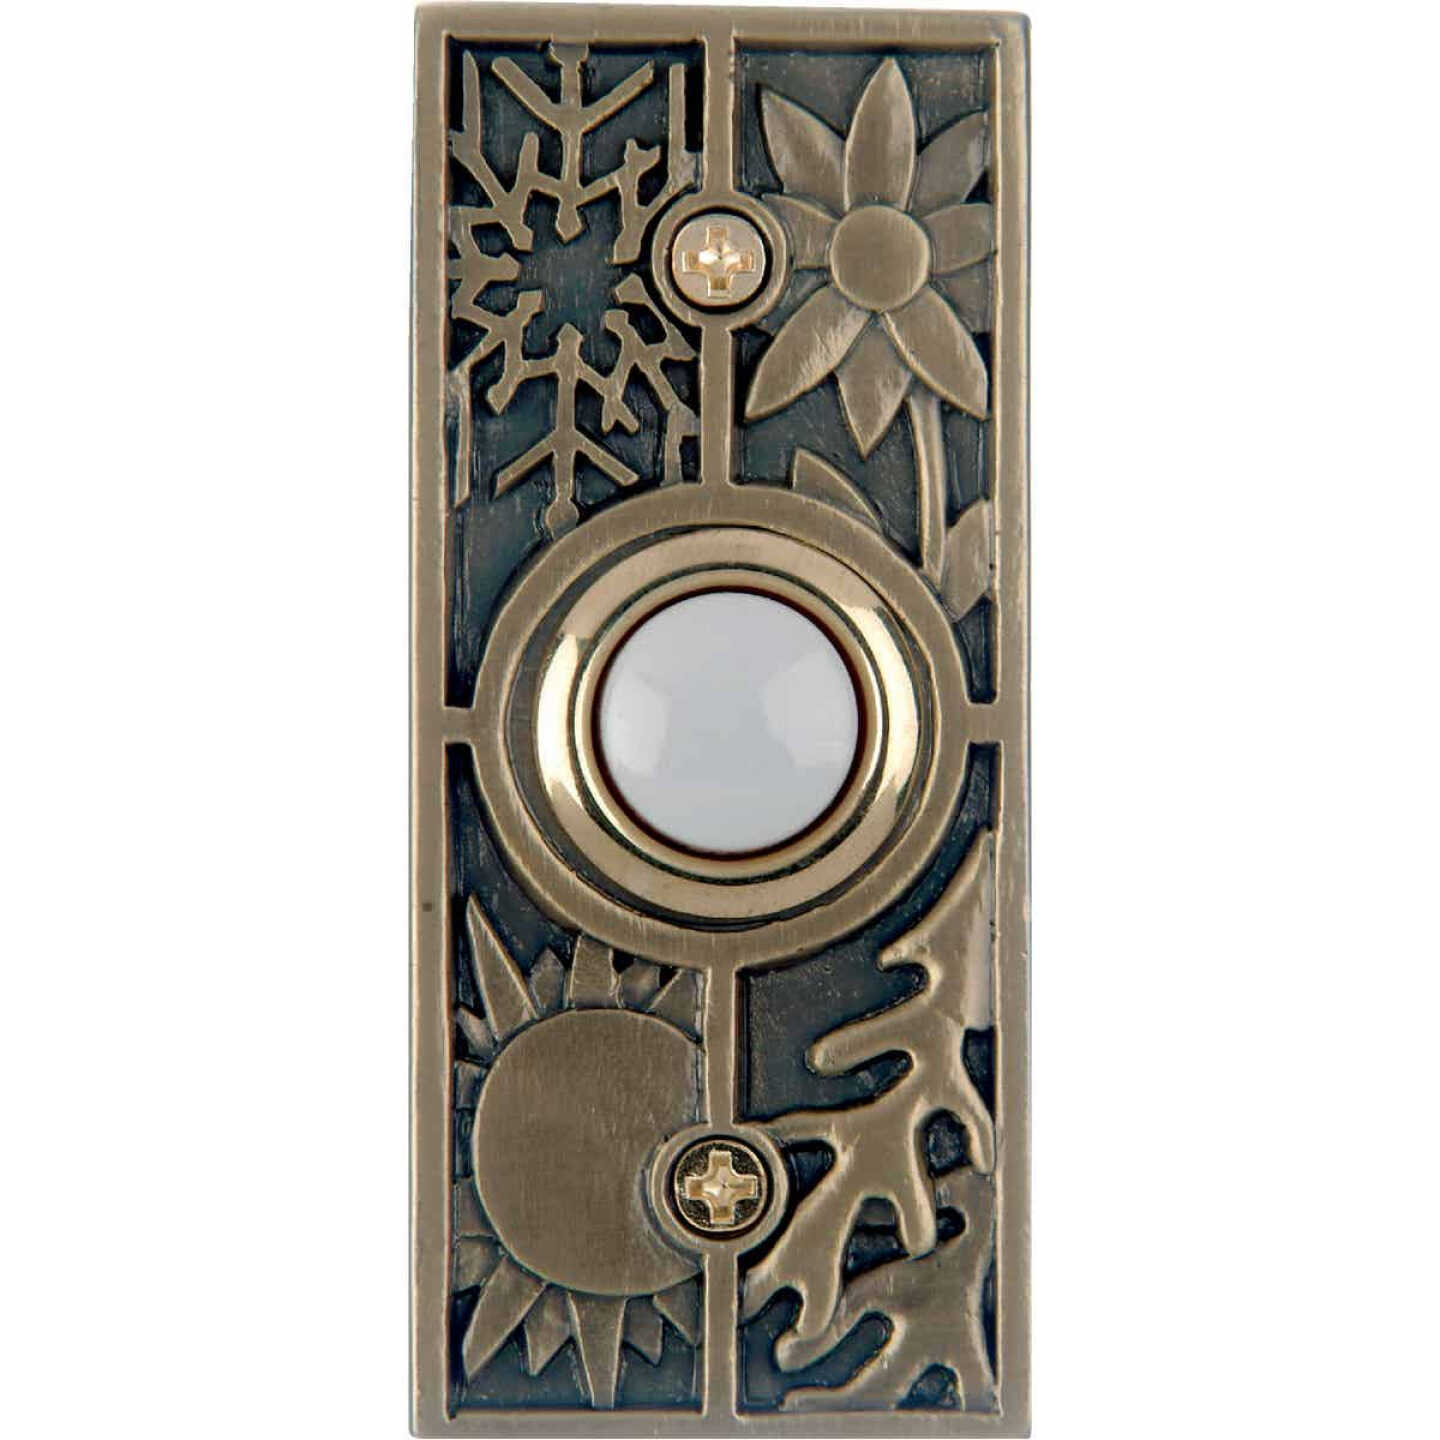 IQ America Wired Antique Brass Seasonal Lighted Doorbell Push-Button -  Henery Hardware